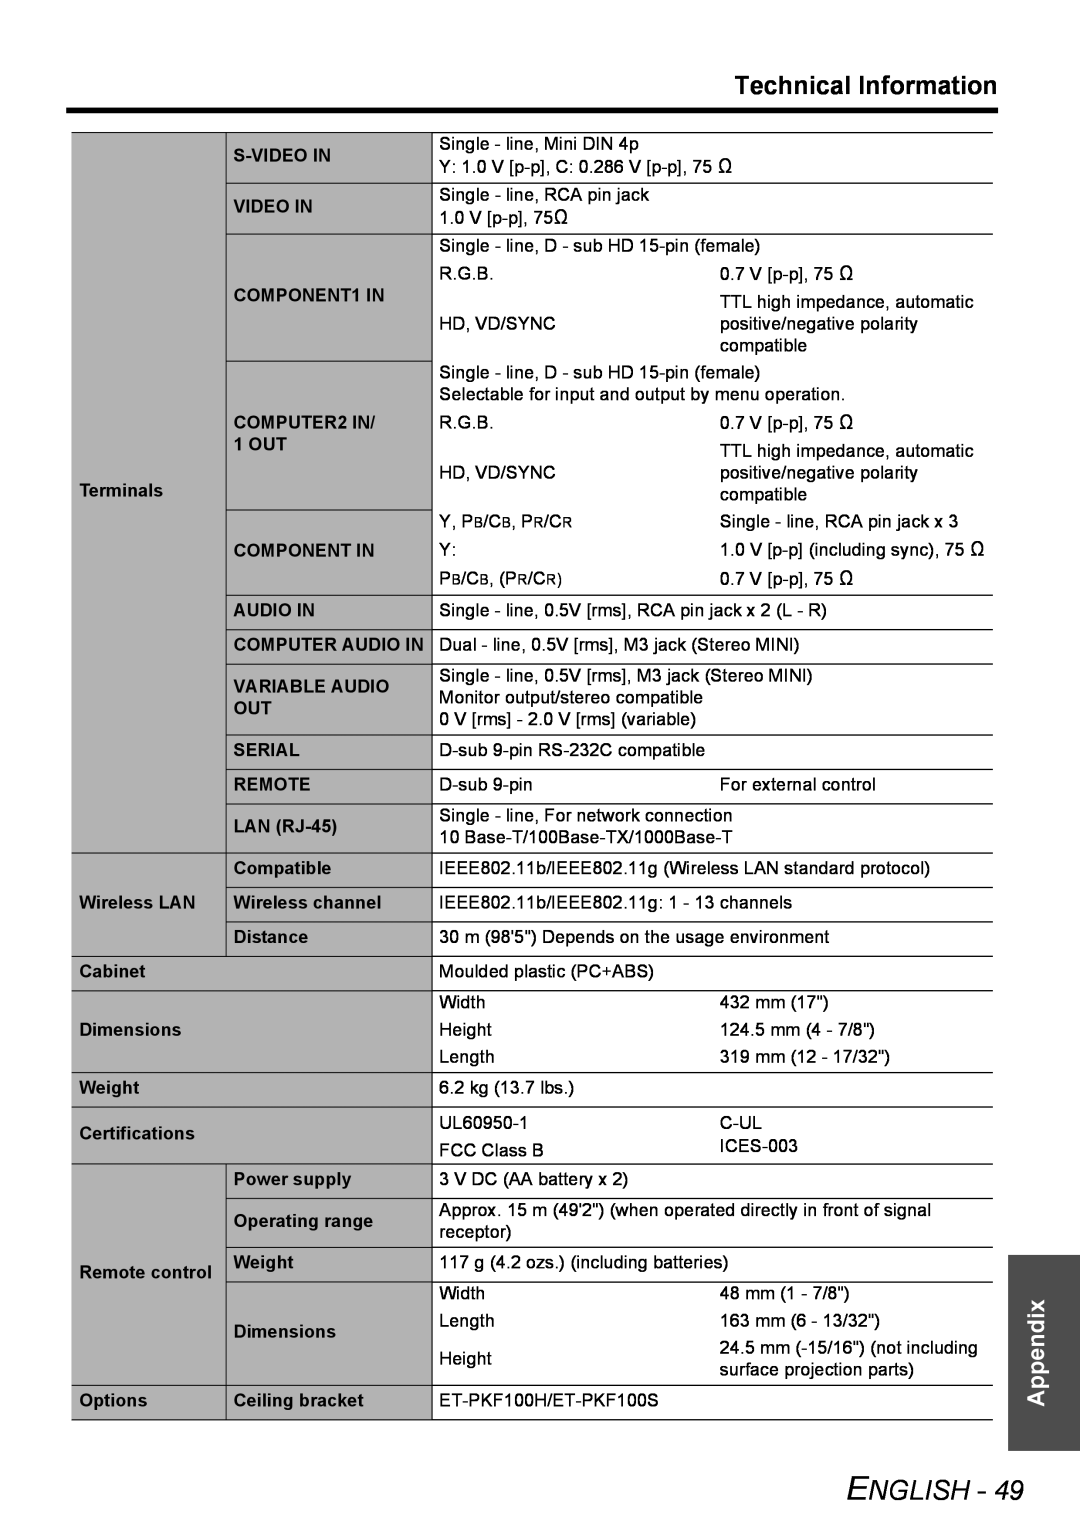 Panasonic PT-FW100NTU manual English, Technical Information, Appendix 